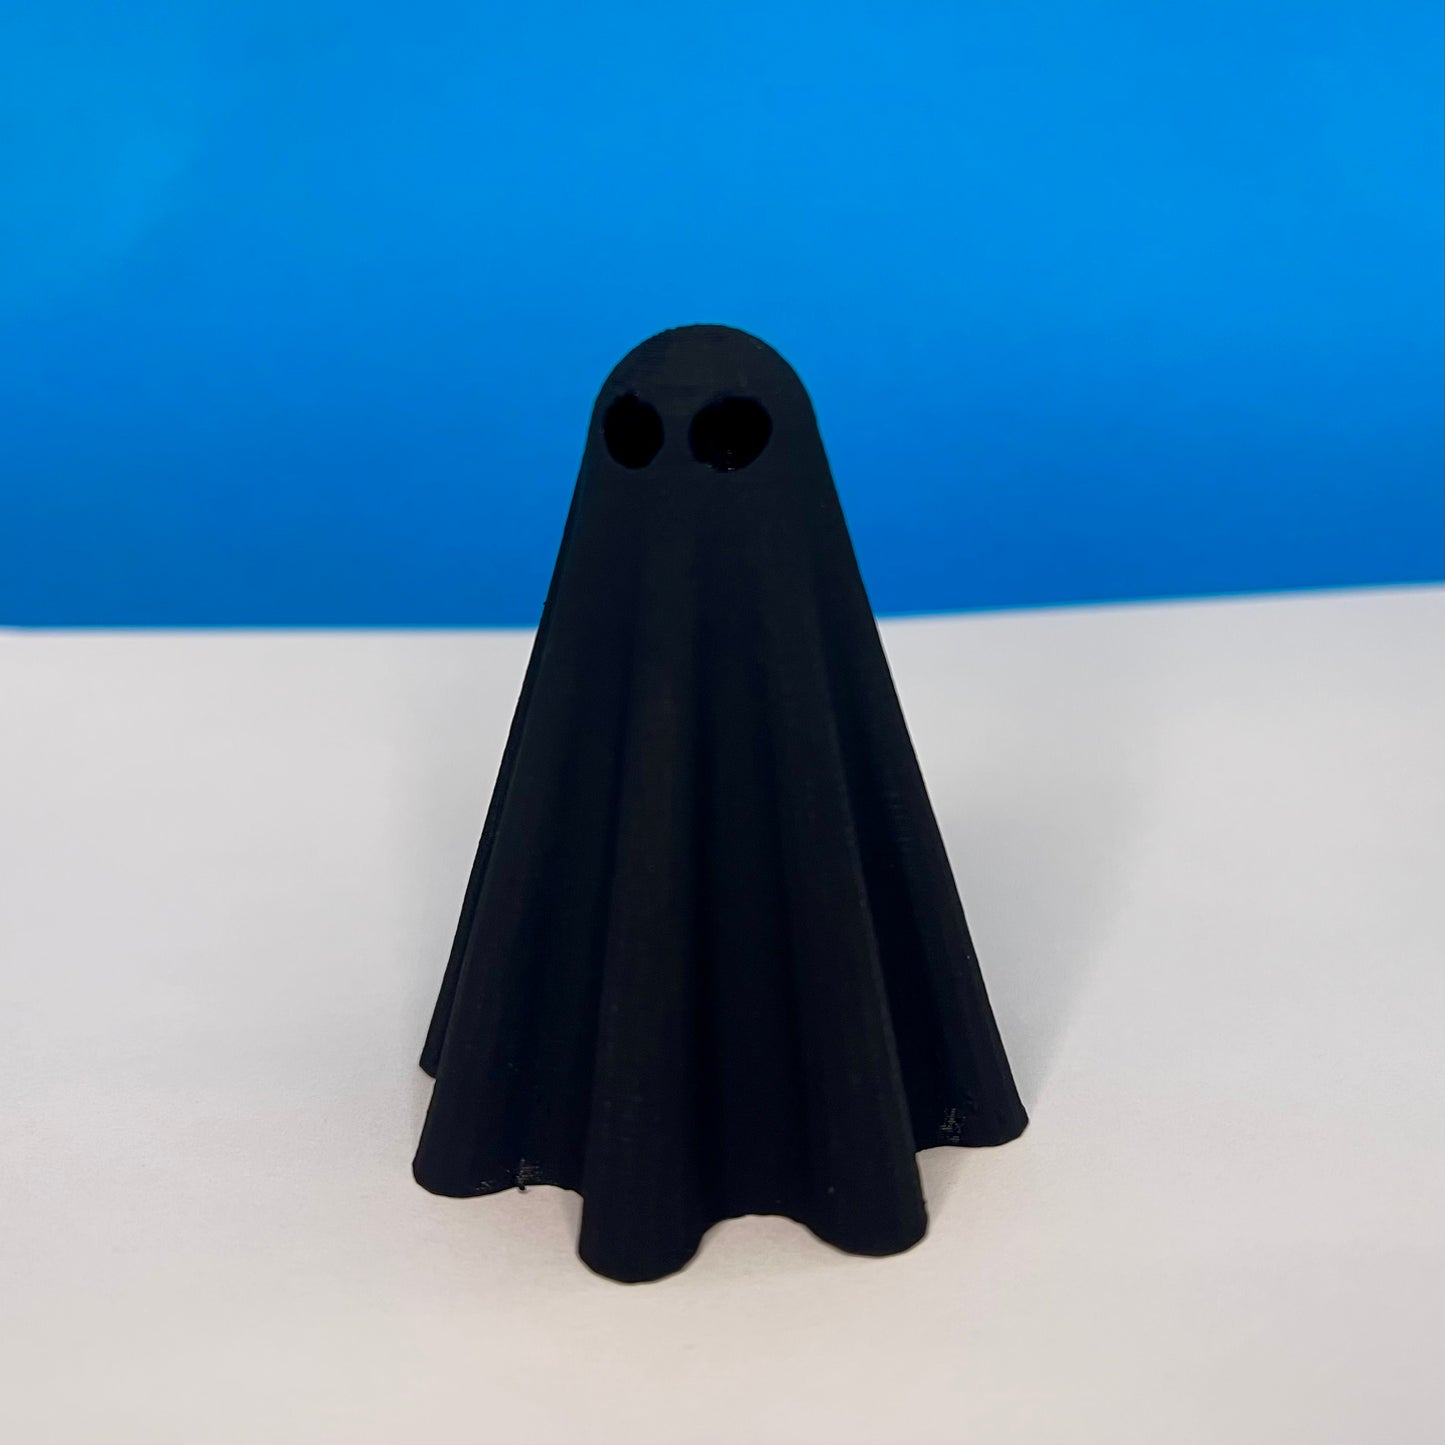 Black 3.0 Ghost Ornament